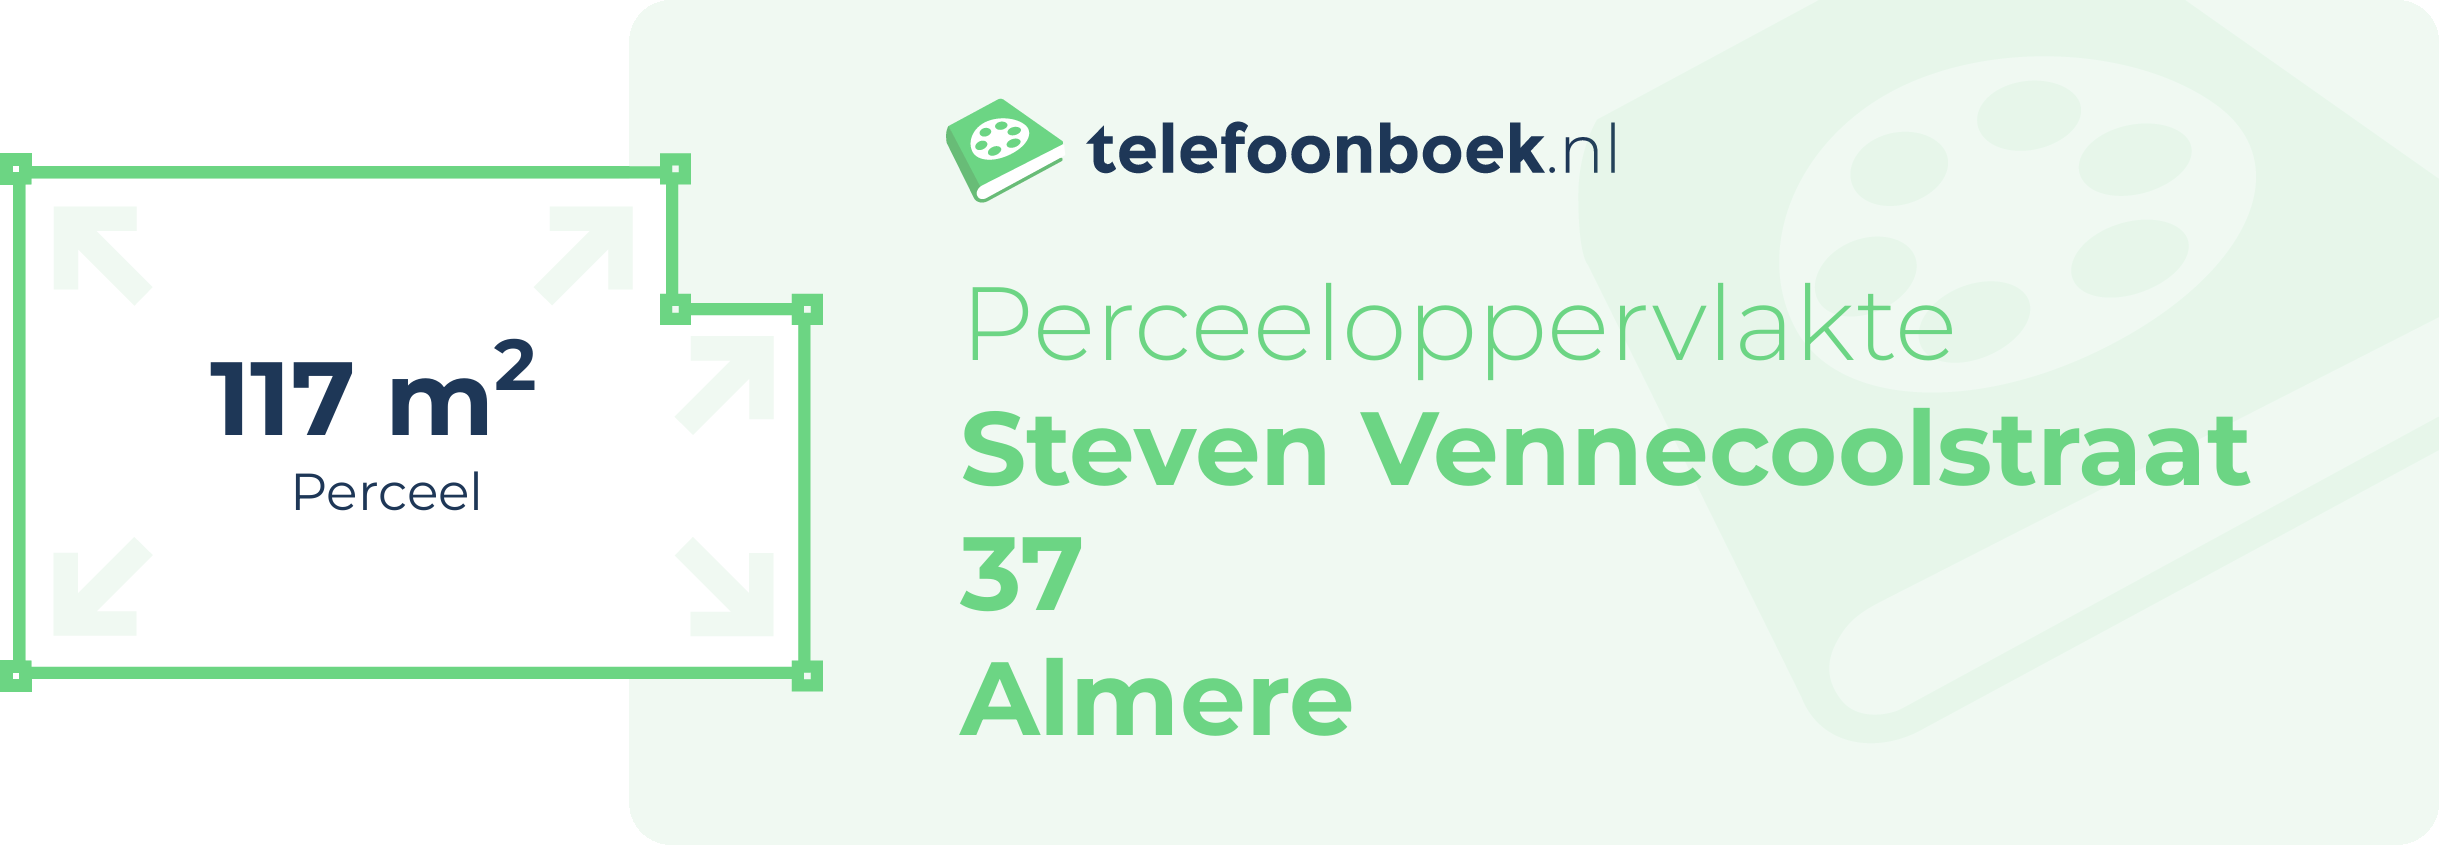 Perceeloppervlakte Steven Vennecoolstraat 37 Almere